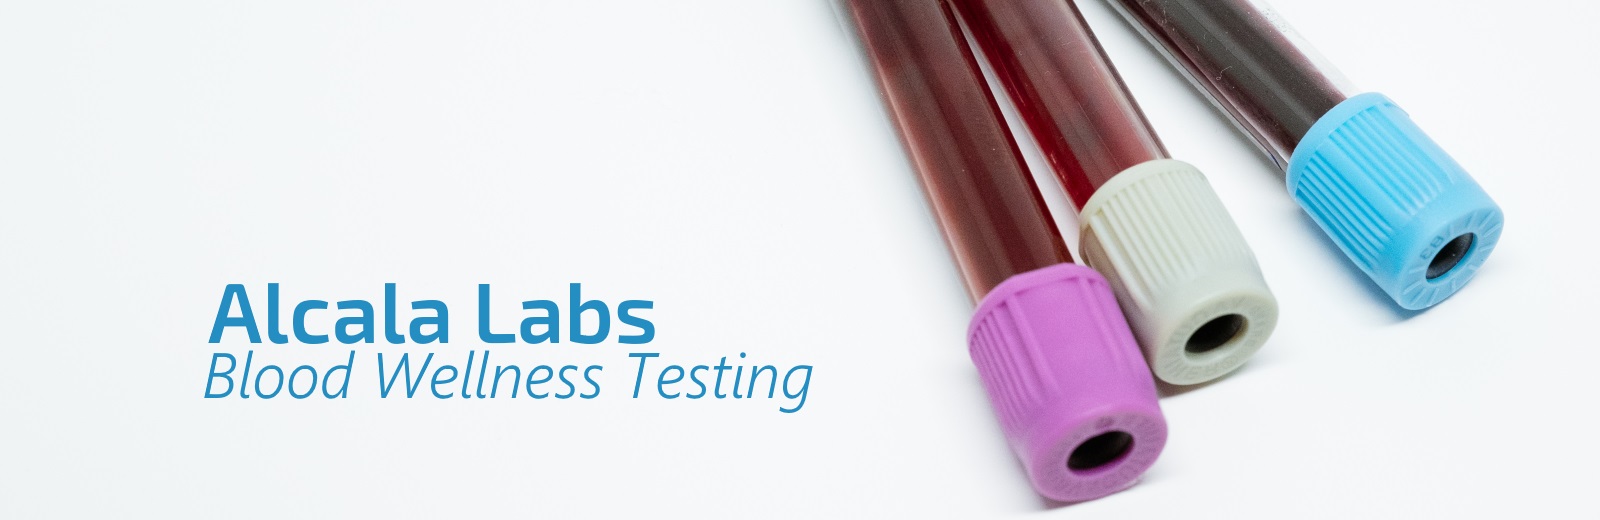 Blood Wellness Testing,jpg